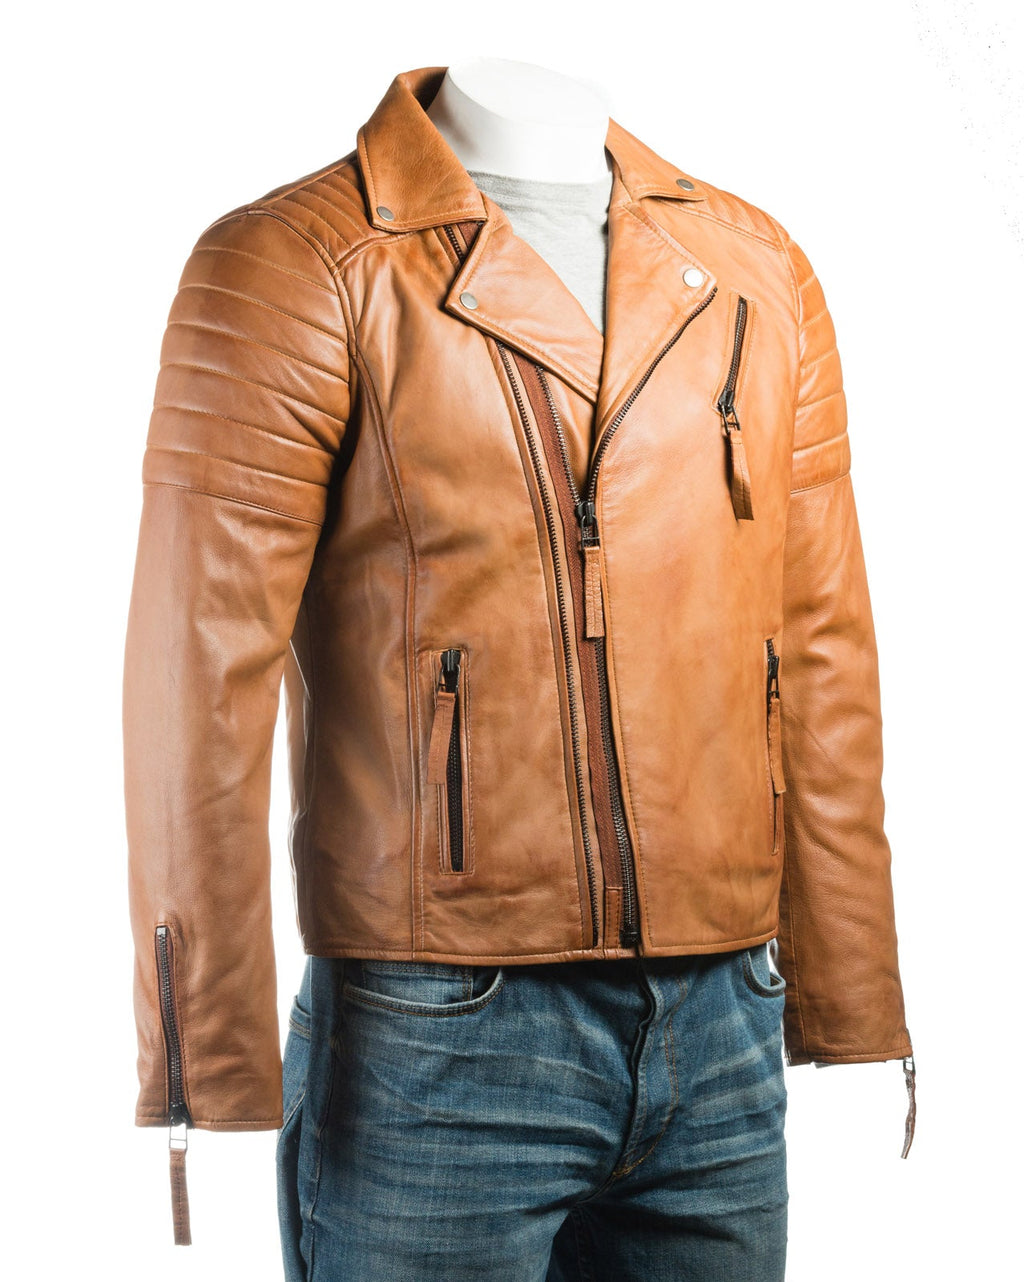 Men's Antique Black Vintage Look Biker Style Leather Jacket: Placido